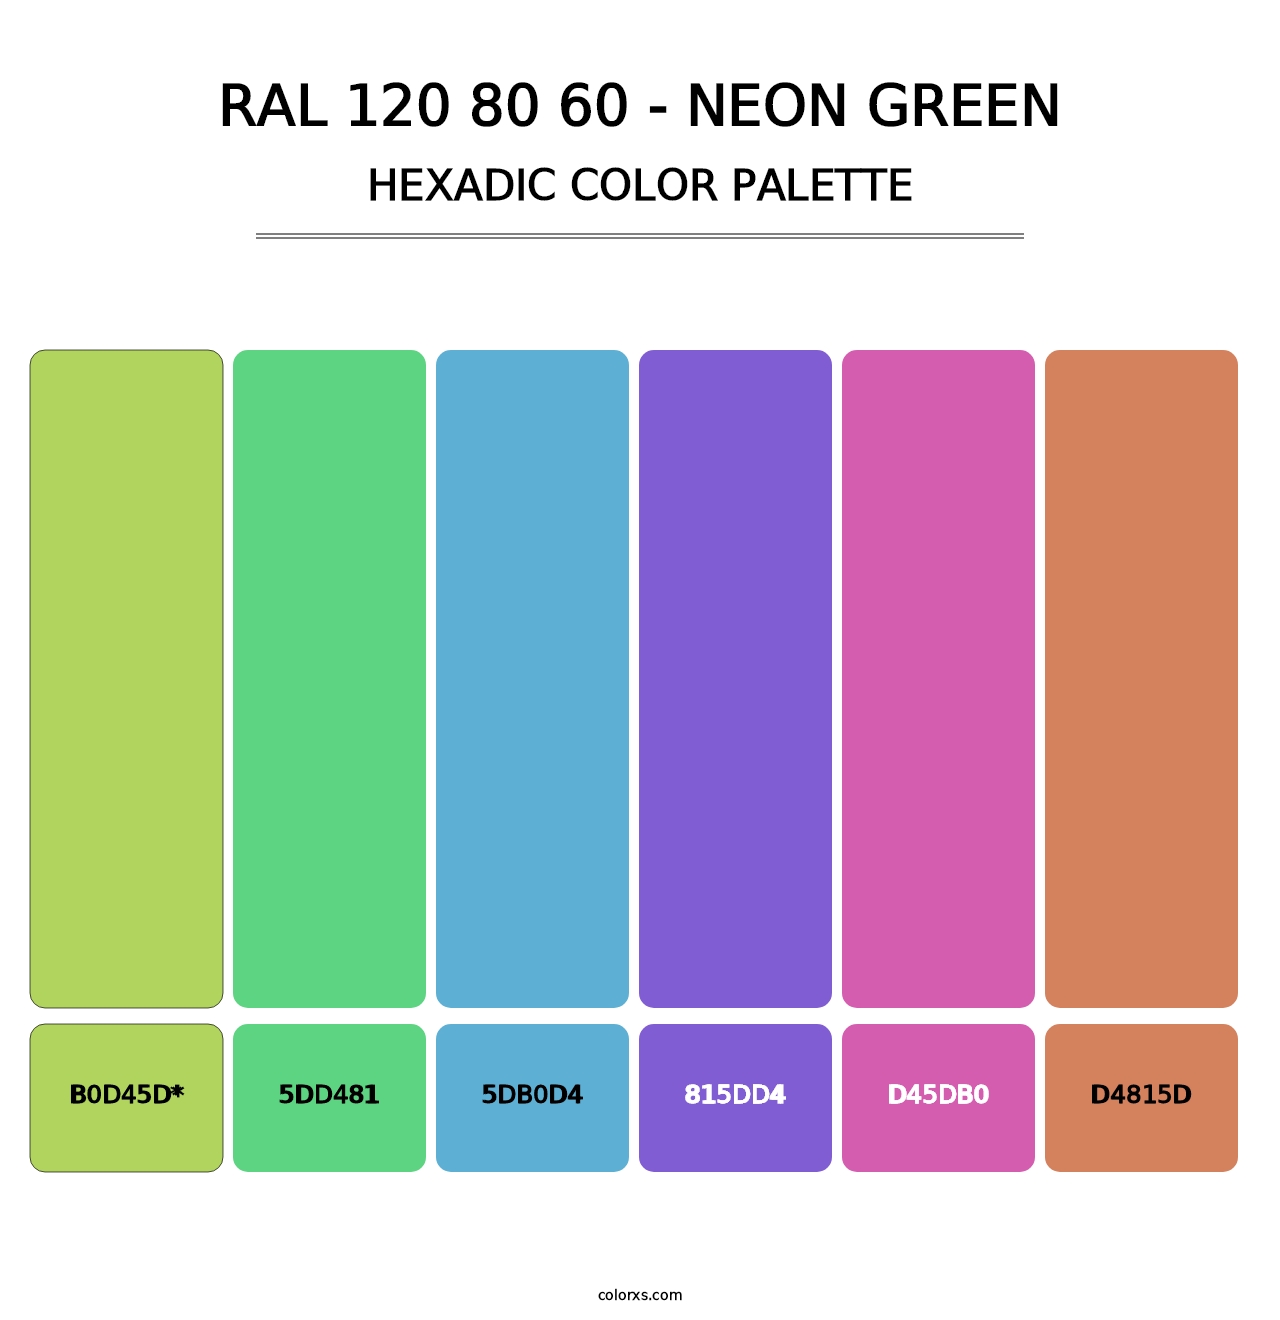 RAL 120 80 60 - Neon Green - Hexadic Color Palette